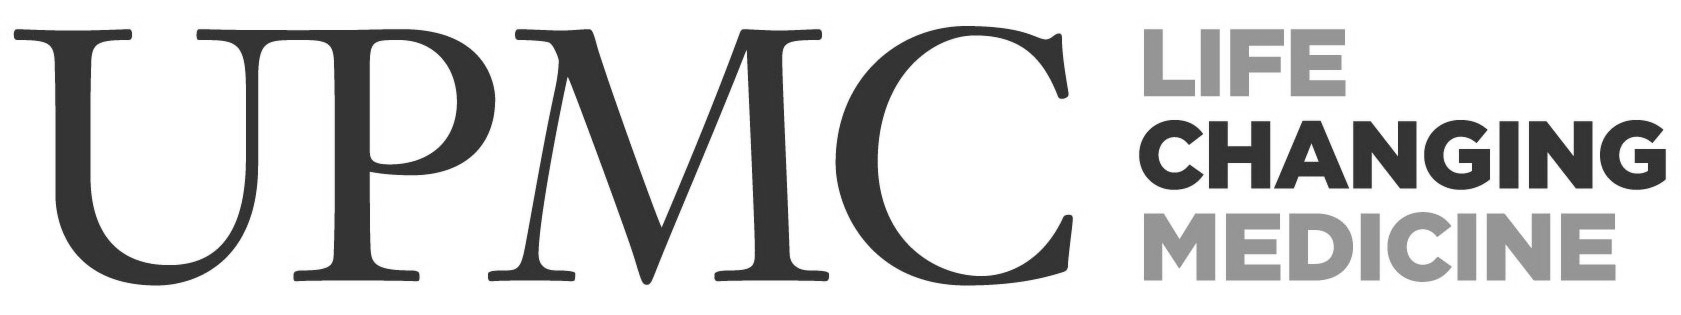 UPMC-logo.jpg